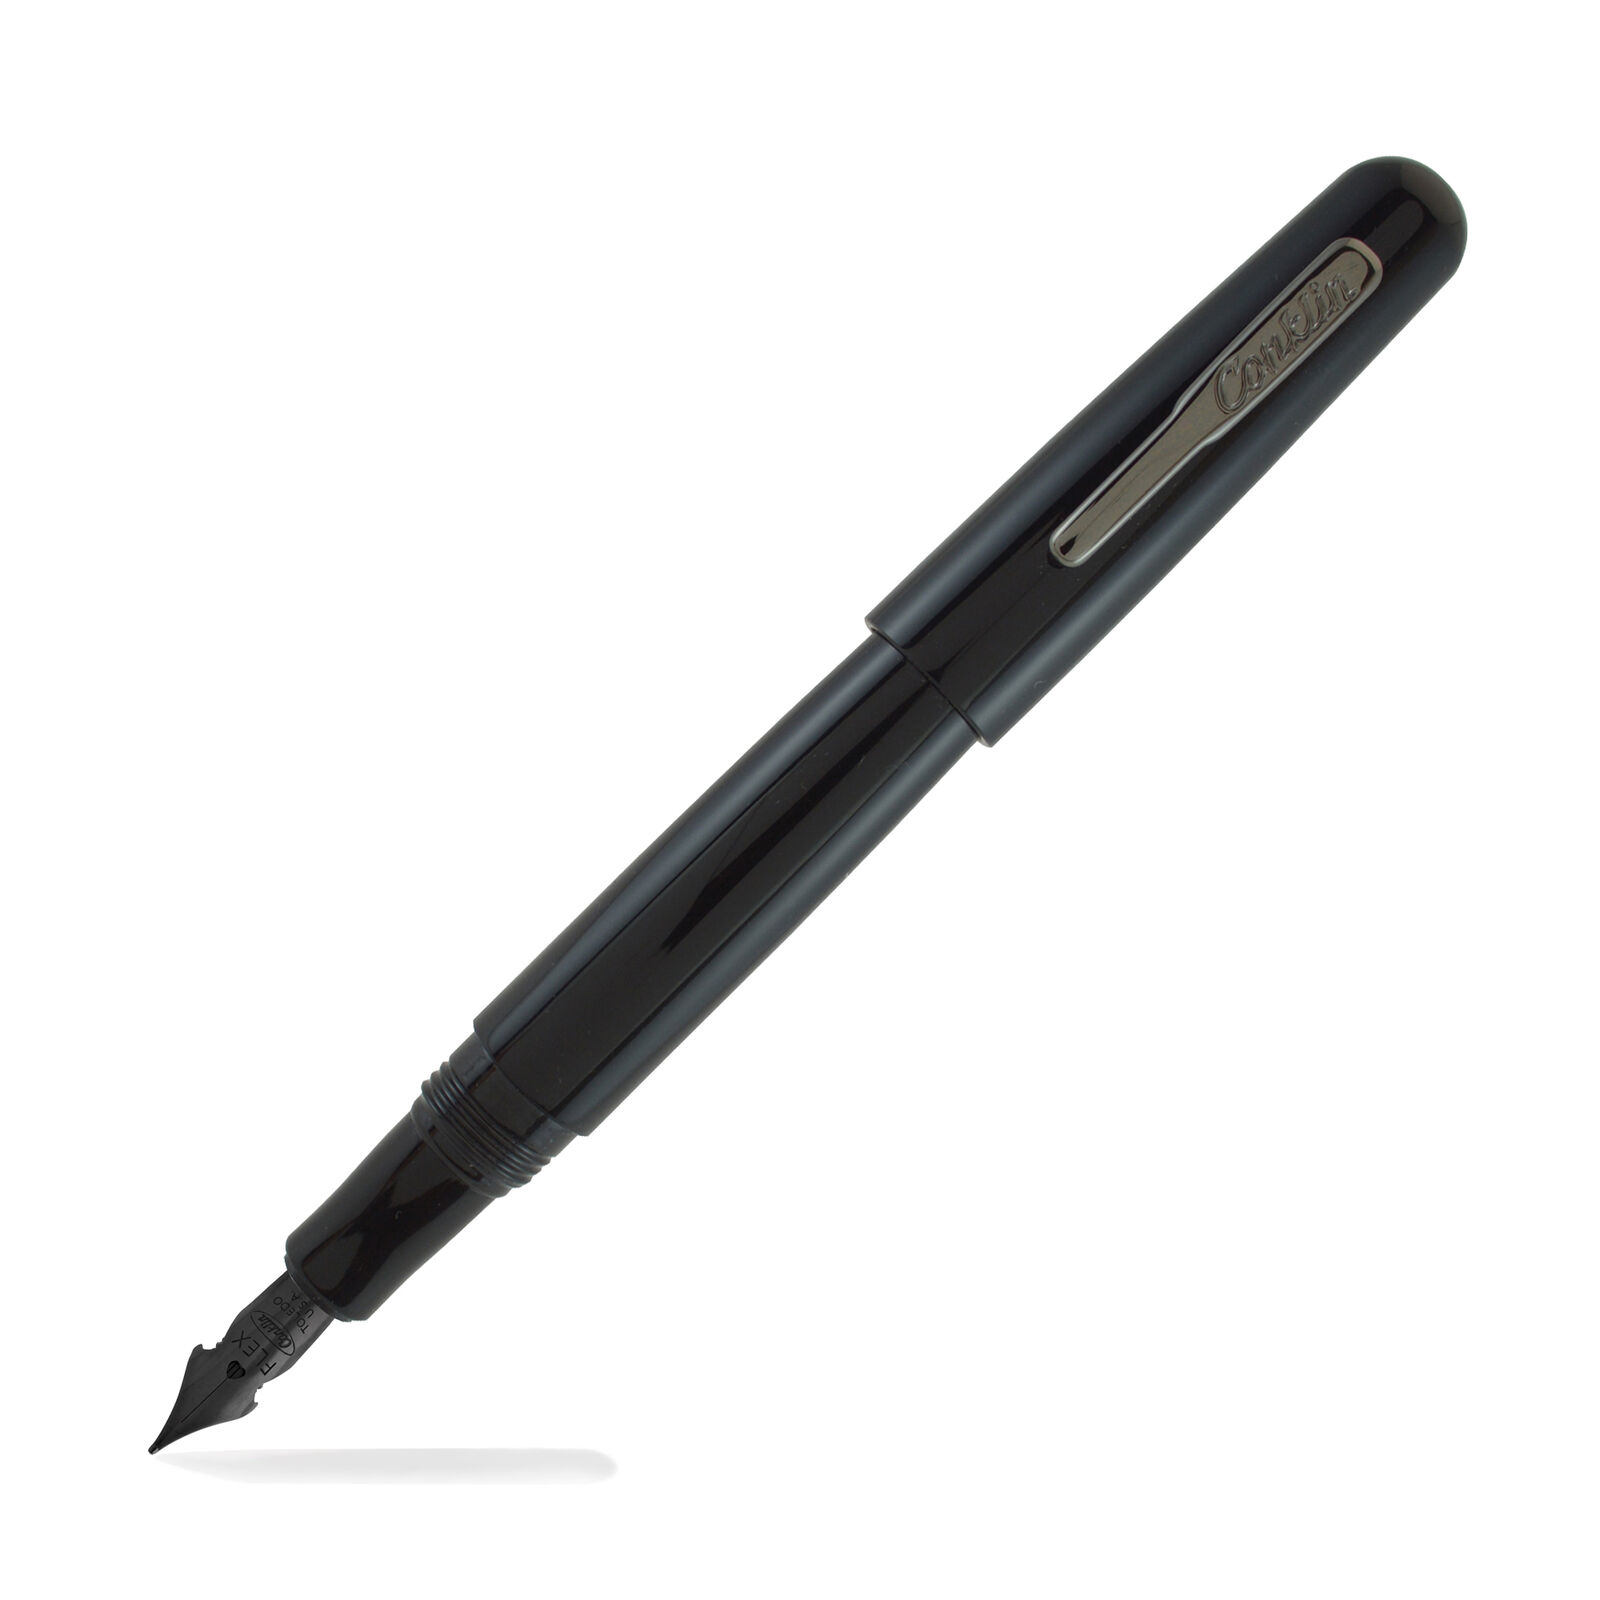 Conklin All American Fountain Pen - Raven Black - Omniflex Nib - New in Gift Box